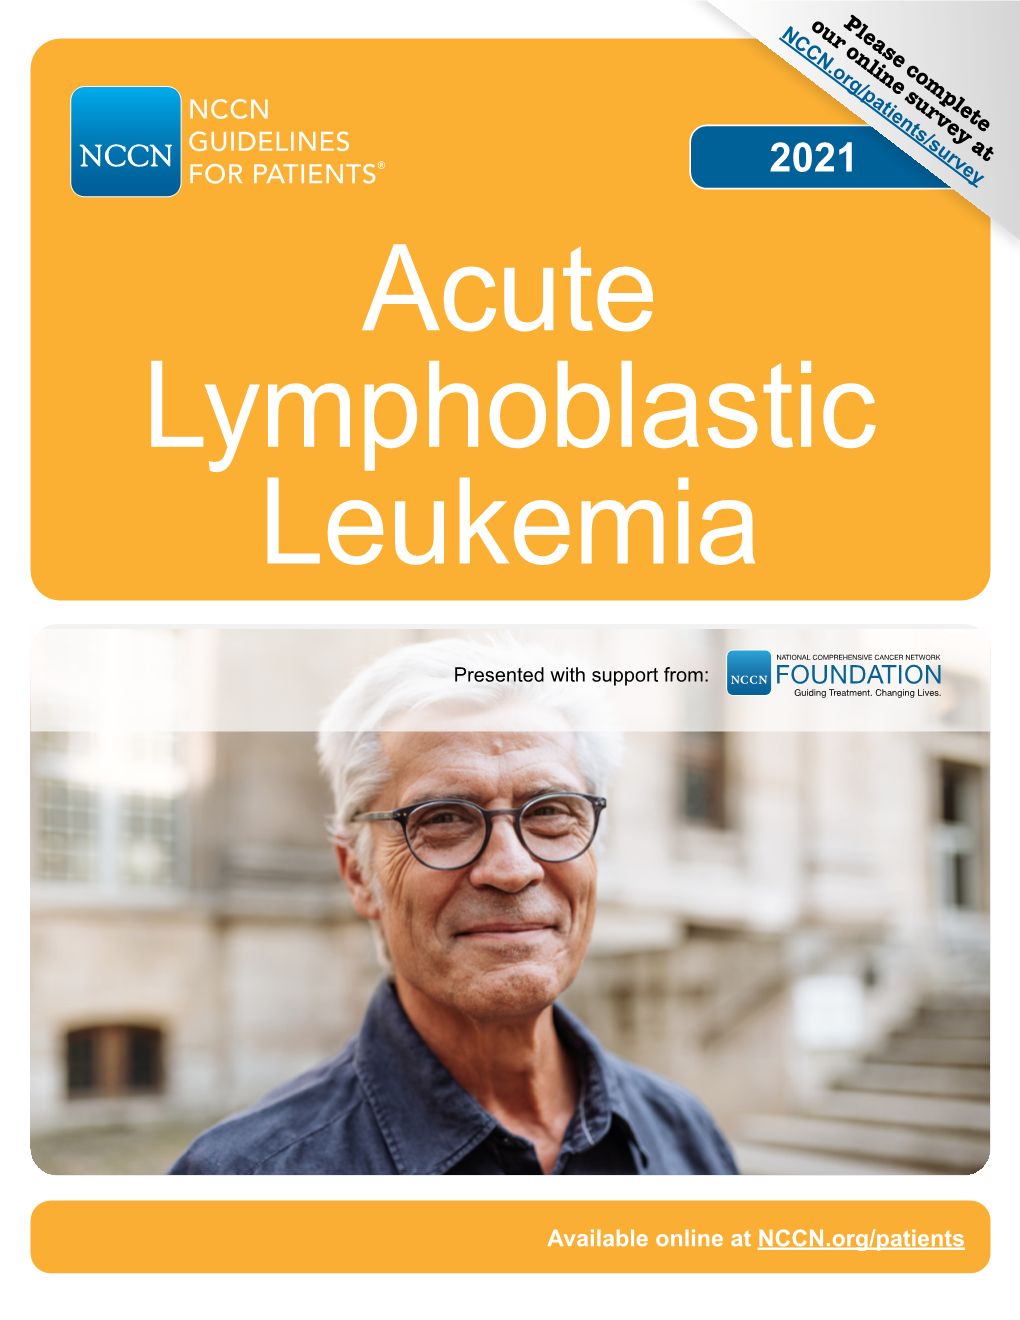 NCCN Guidelines for Patients Acute Lymphoblastic Leukemia